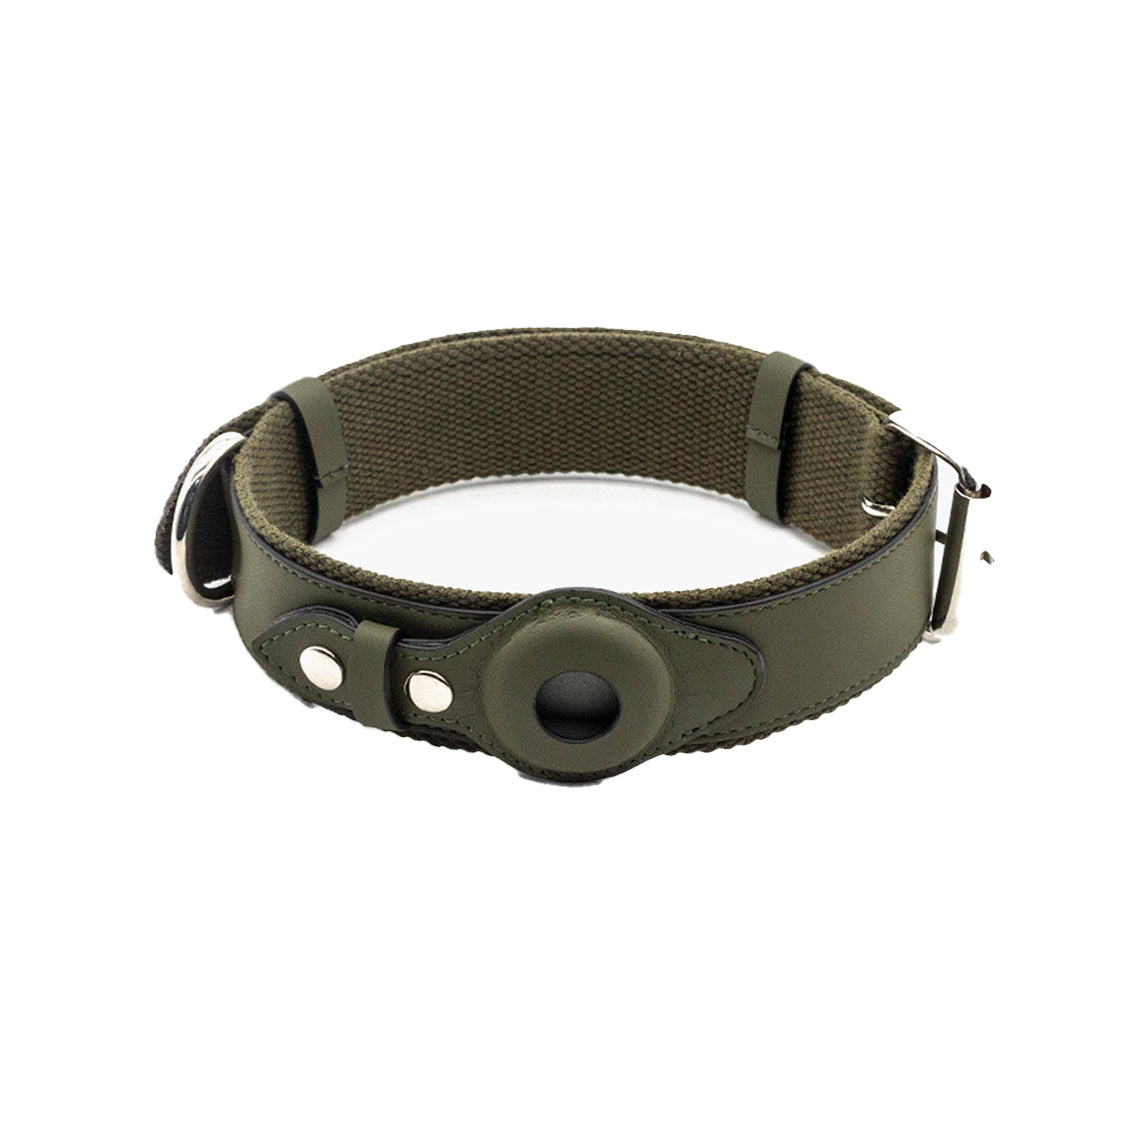 Green dog collar with airtag case | GPS dog tracking collar green